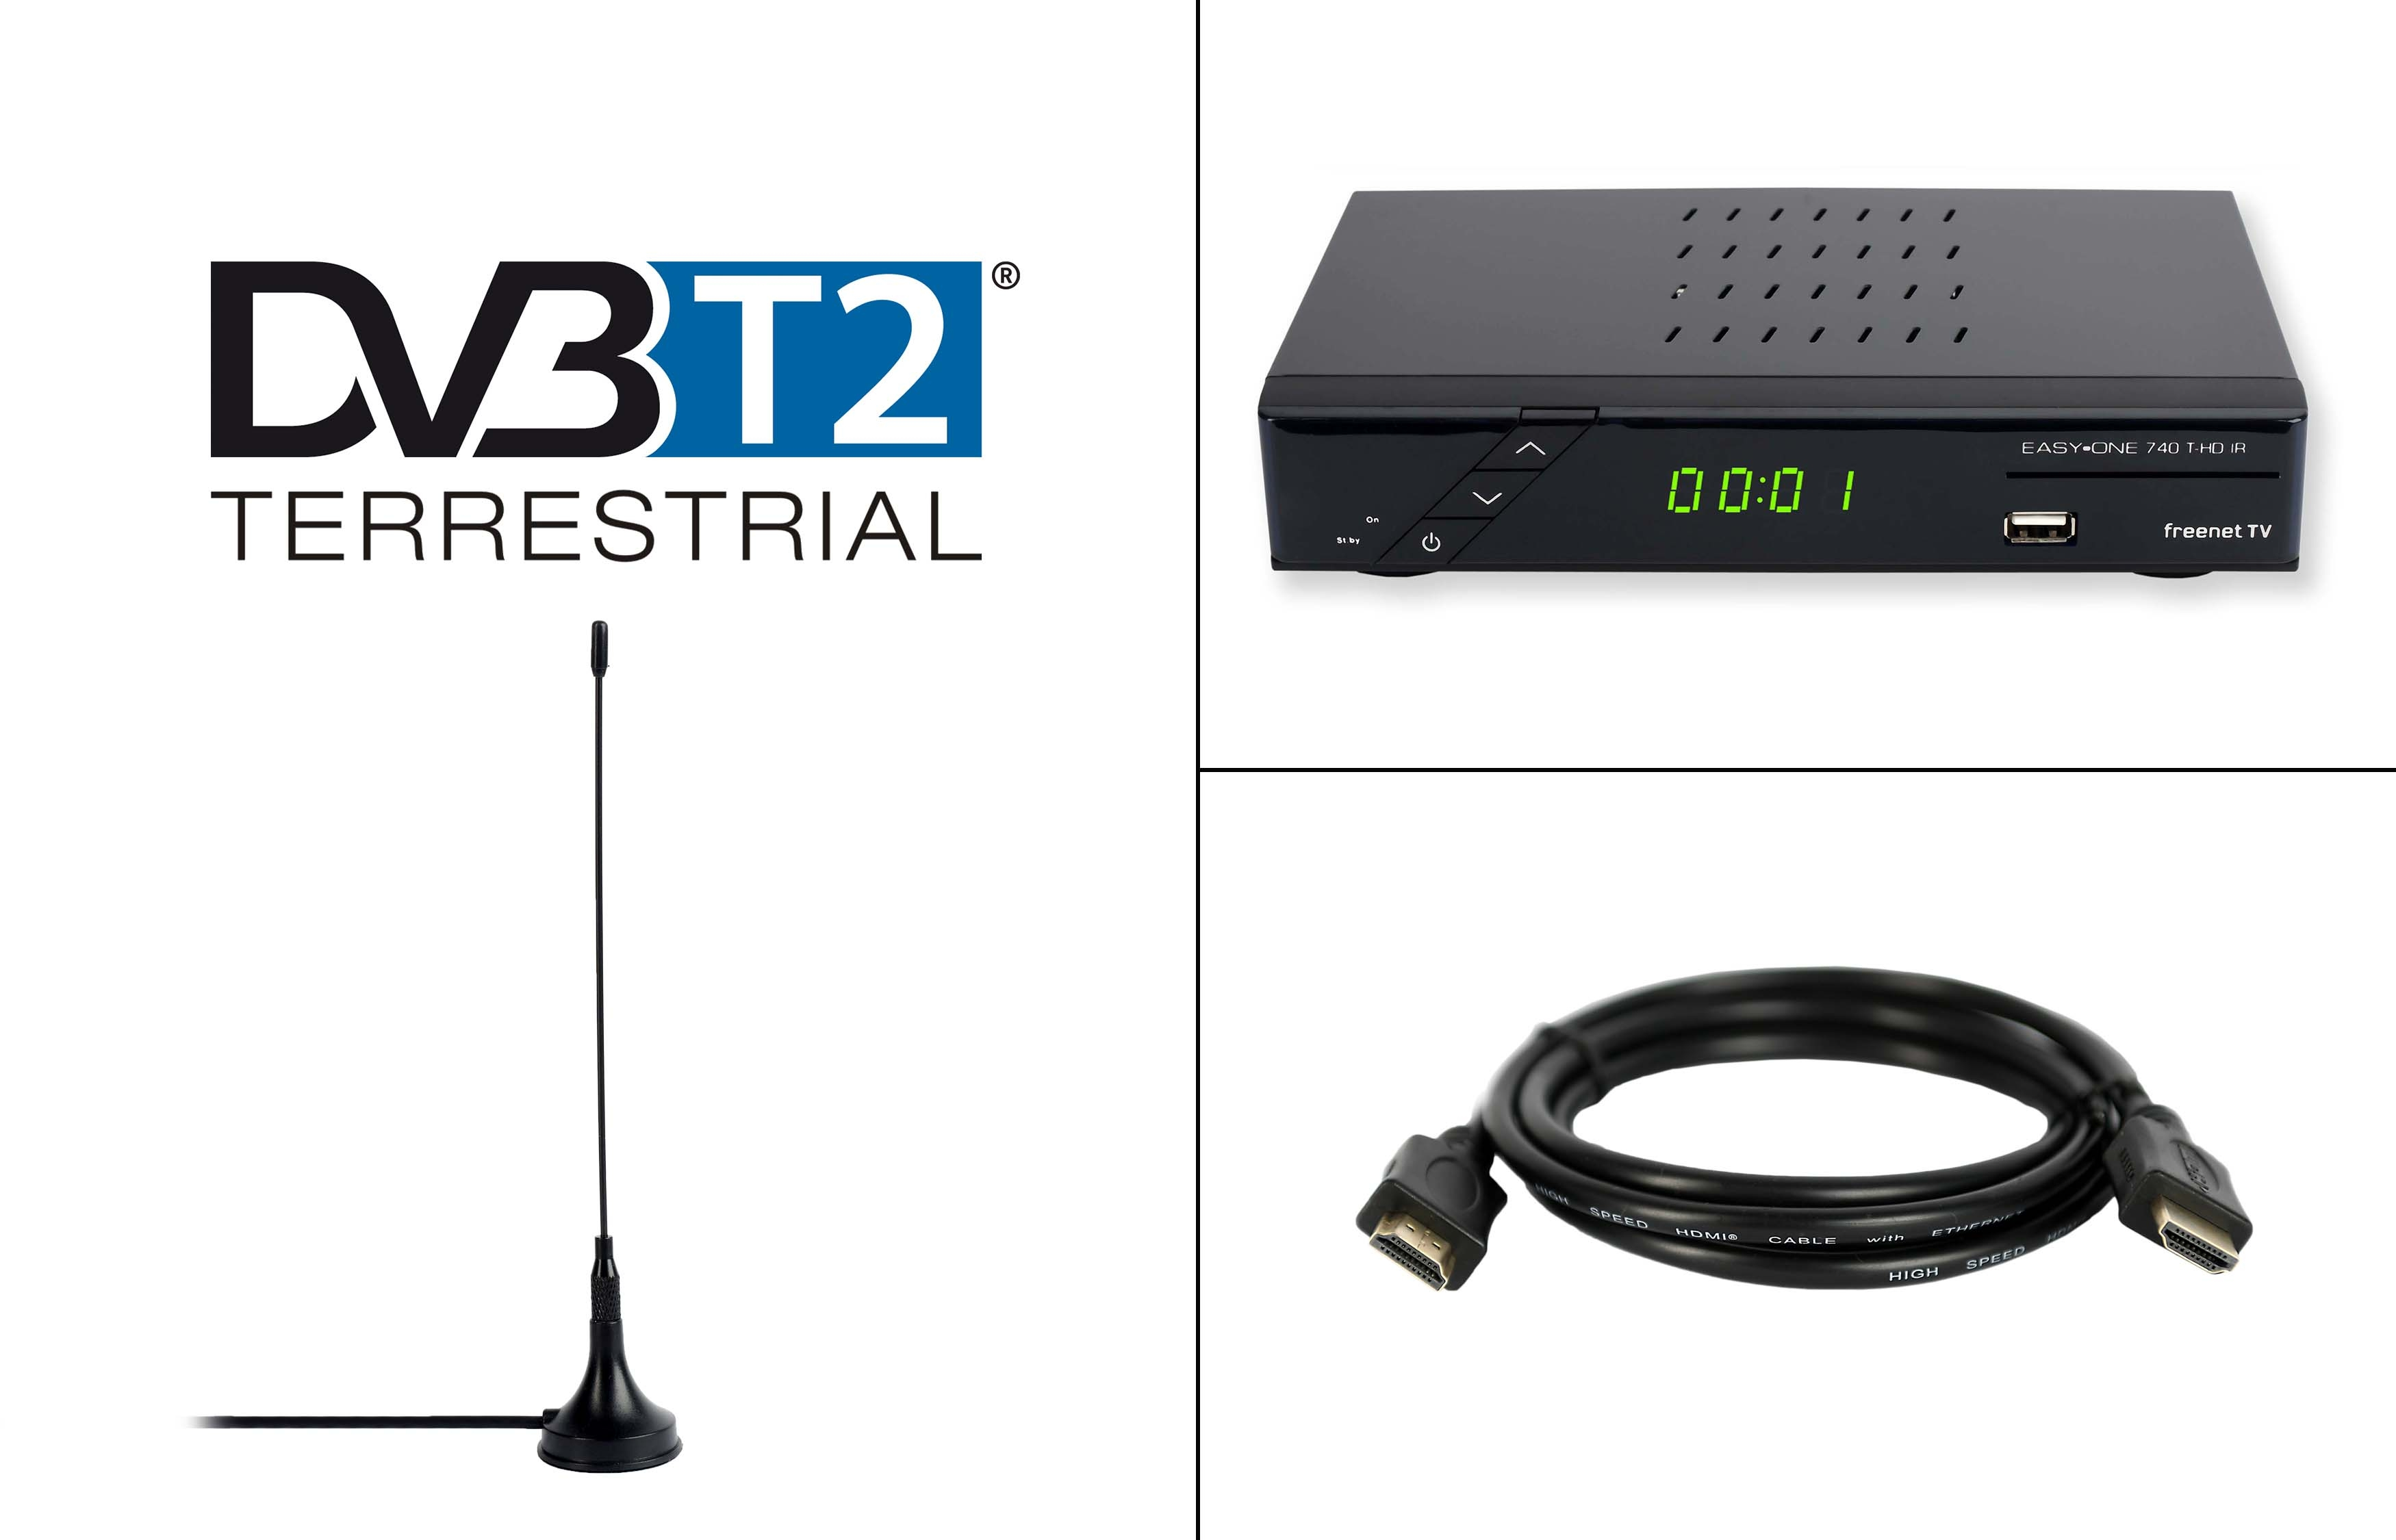 SET-ONE 740 HD (H.265), schwarz) DVB-T-Receiver PVR-Funktion, DVB-T2 Home Bundel (HDTV, DVB-T2 DVB-T, (H.264)